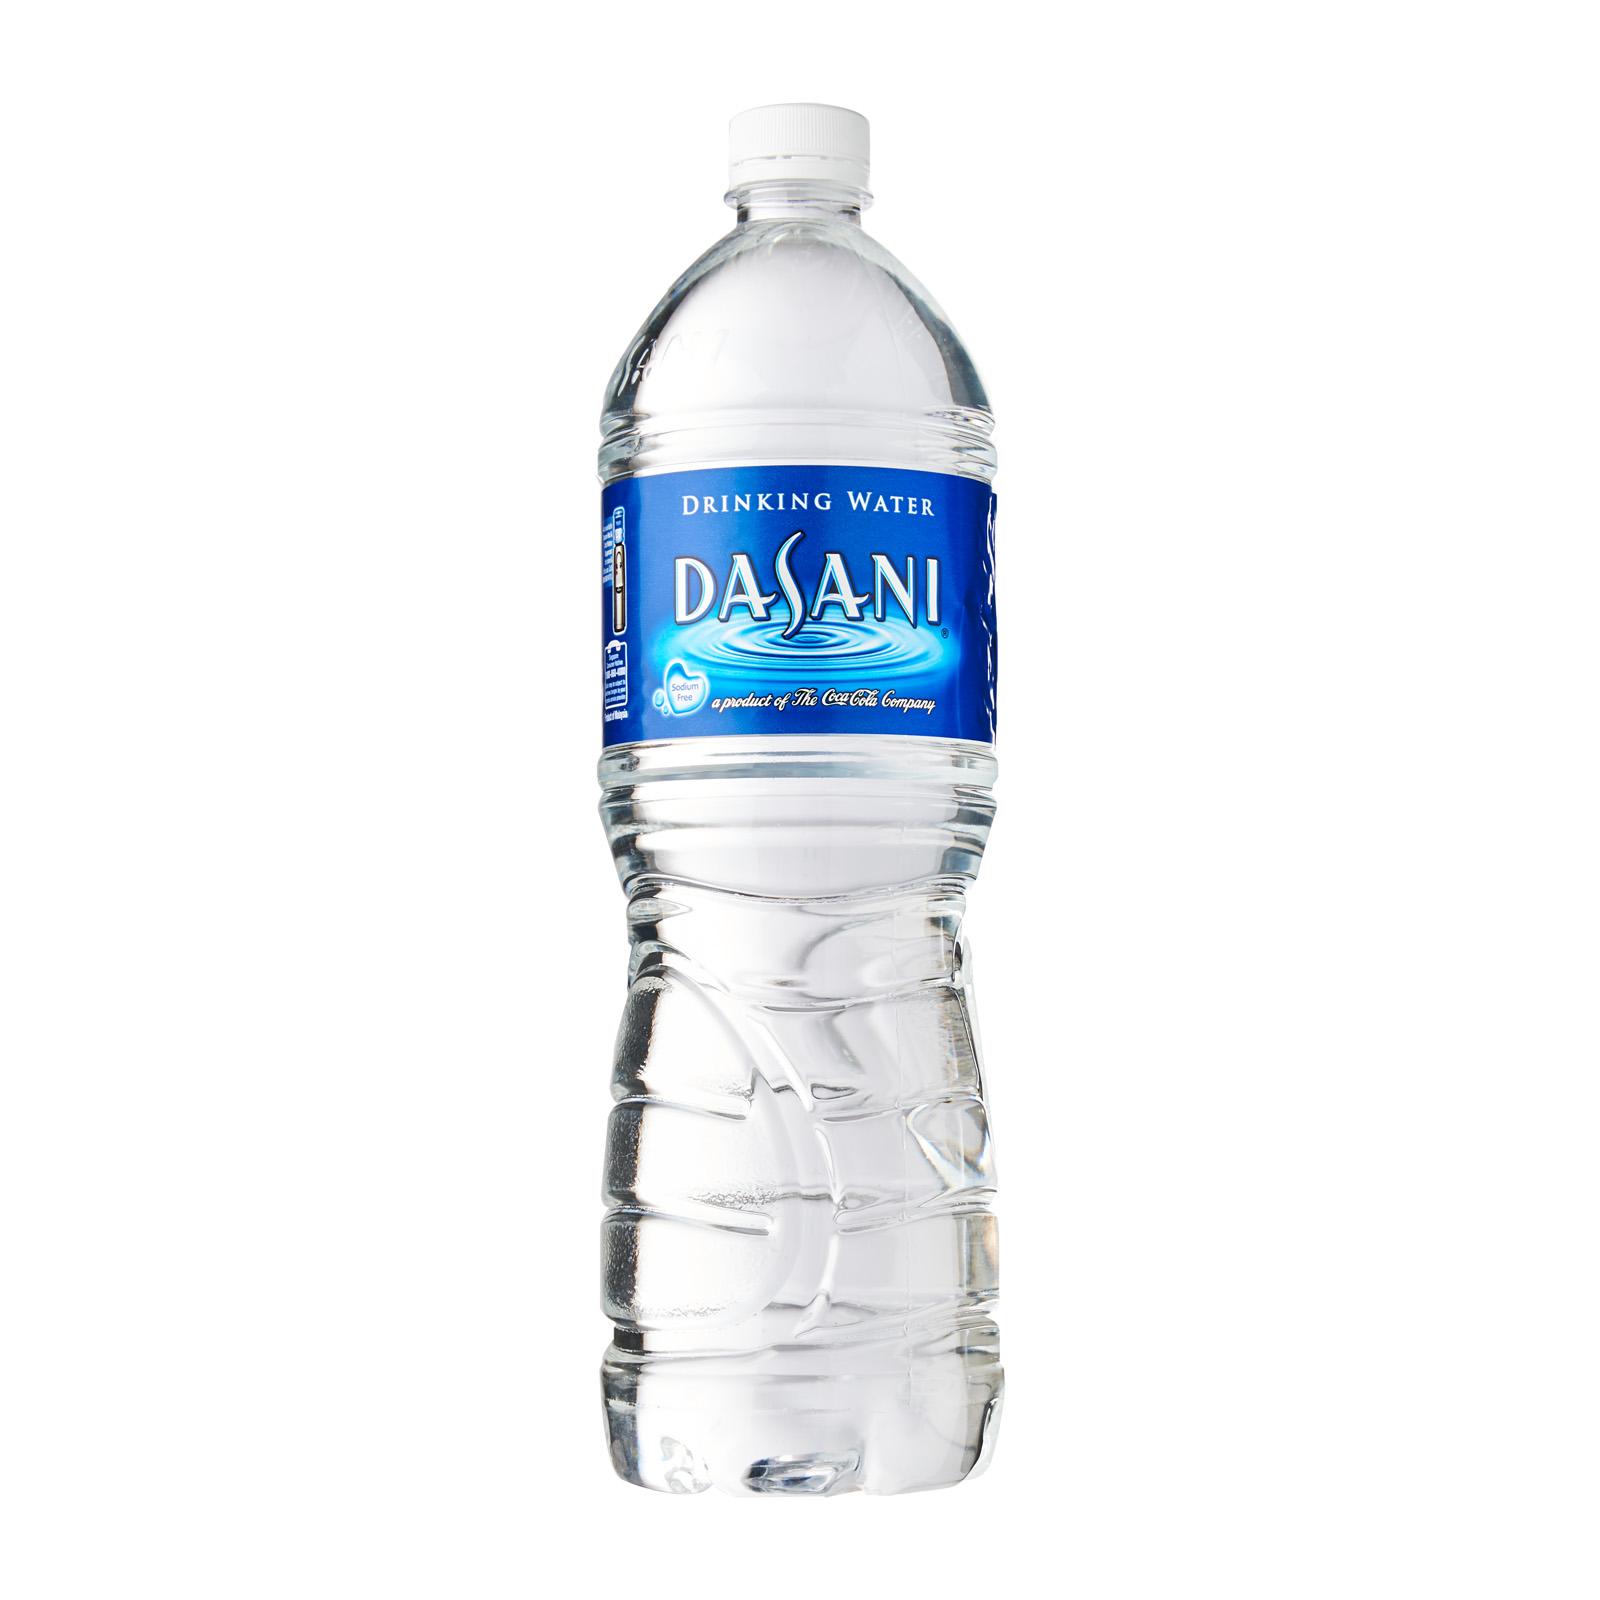 Dasani Drinking Water 1.5L